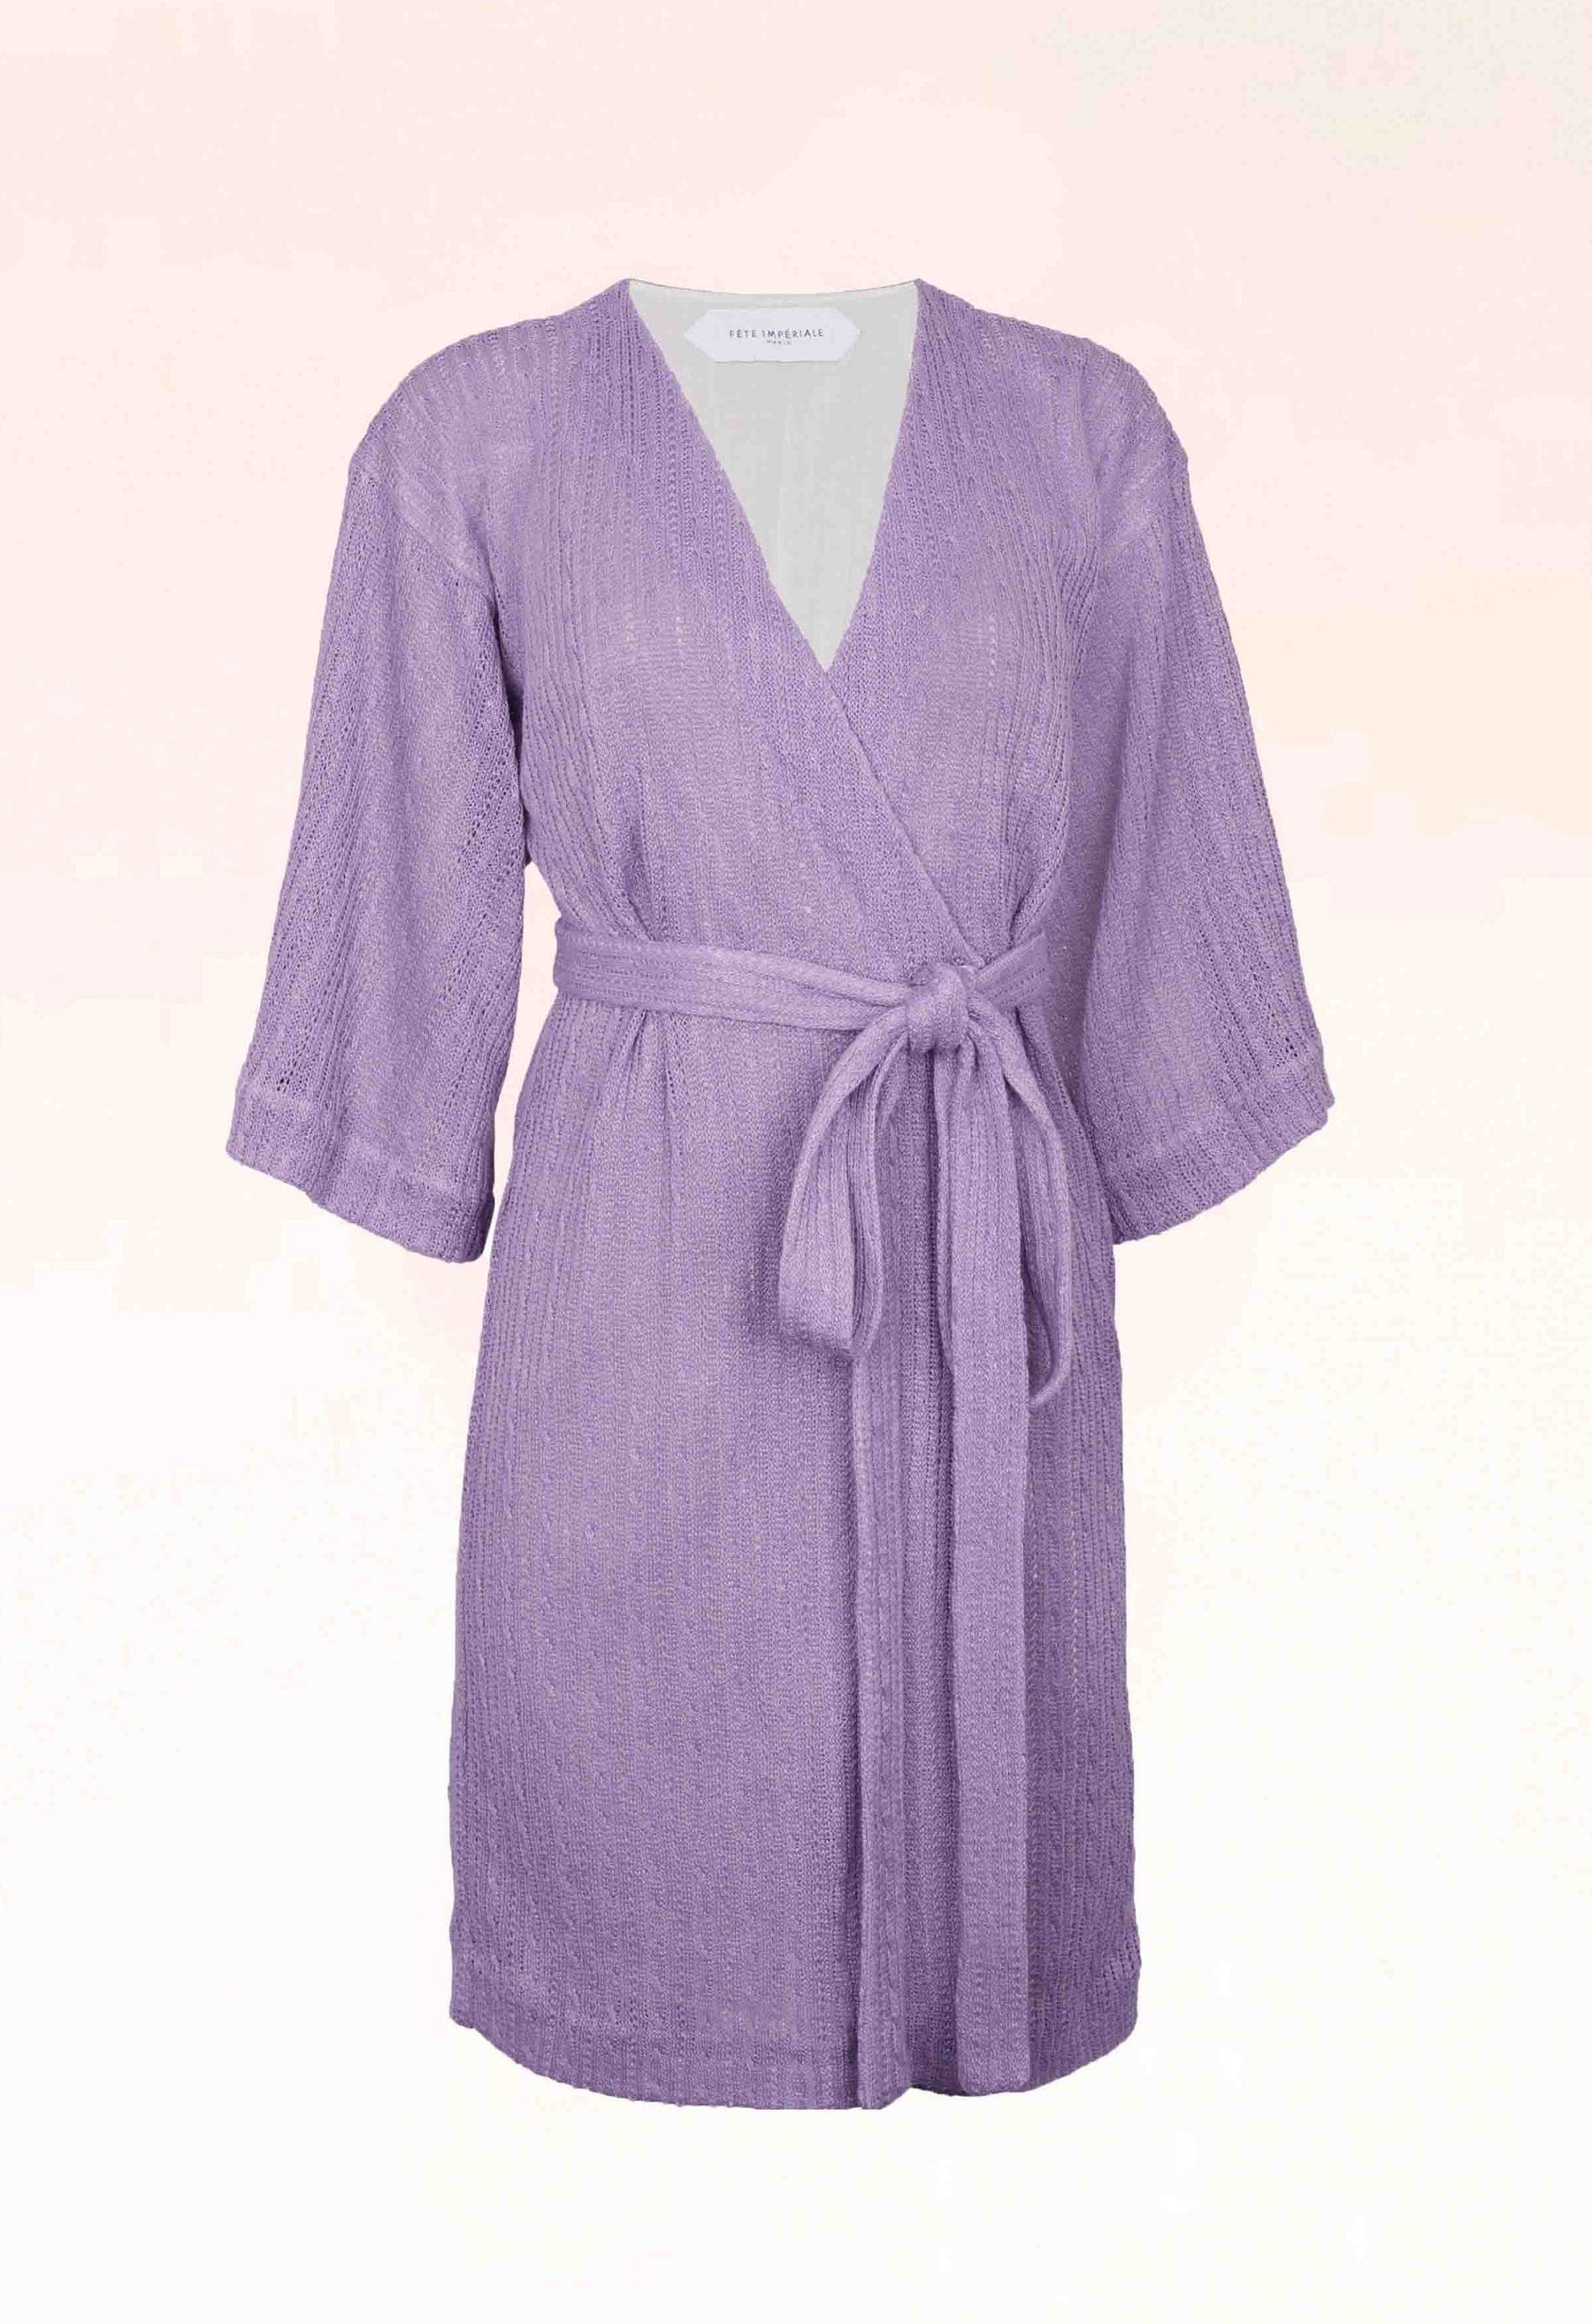 FAYE - Short kimono dress 3/4 sleeves in hemp knit Mauve Dress Fête Impériale